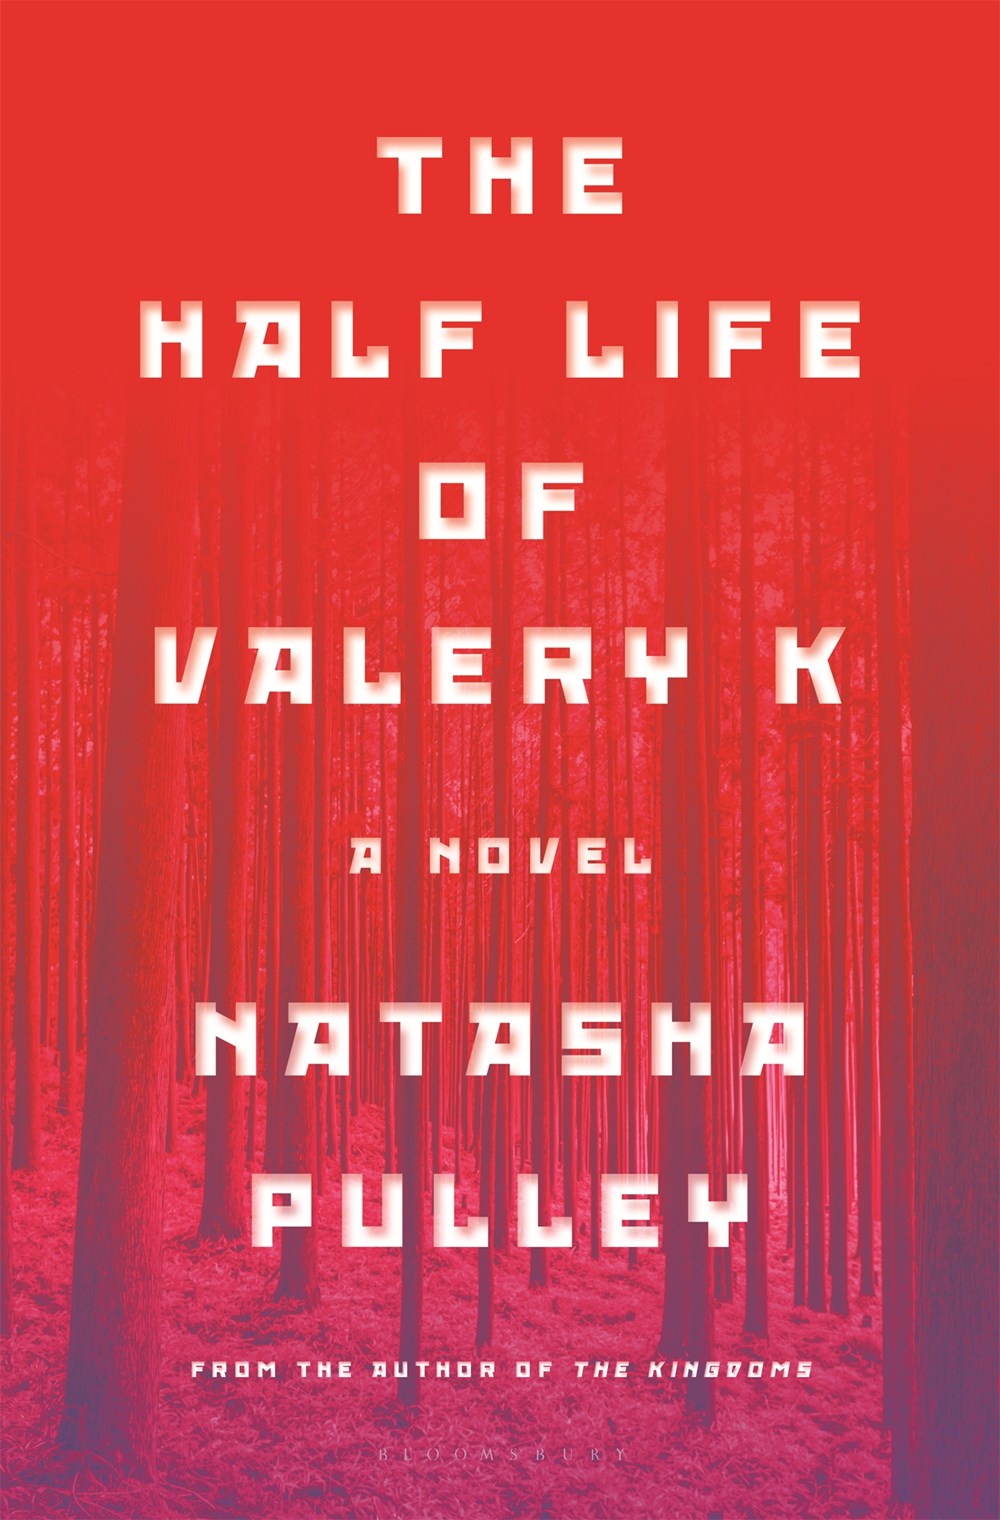 The Half Life of Valery K.